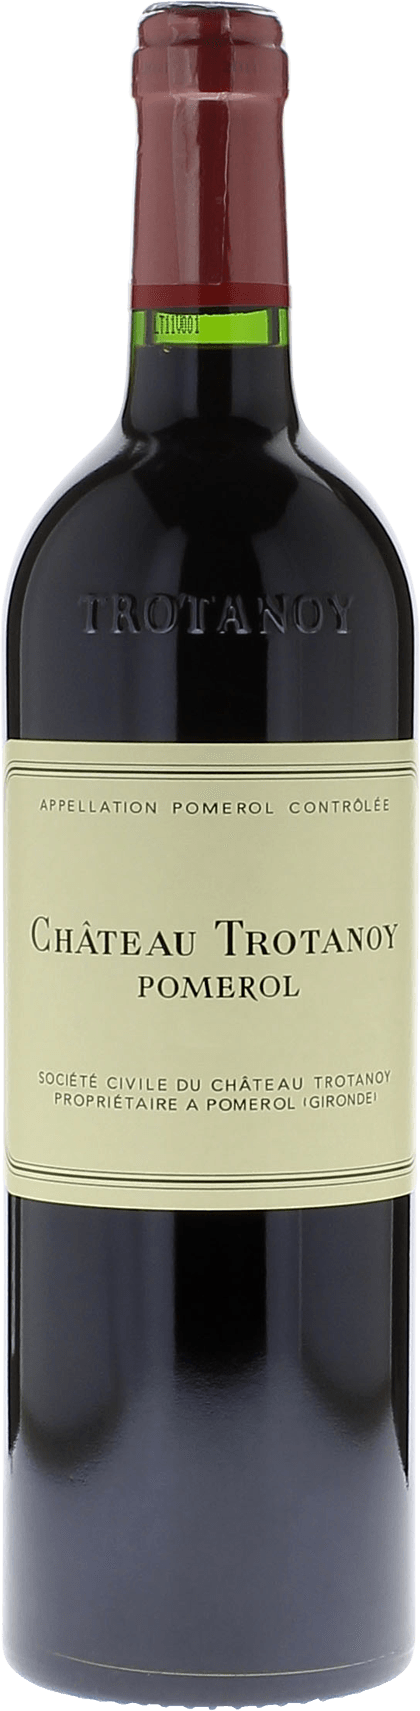 Trotanoy 2000  Pomerol, Bordeaux rouge